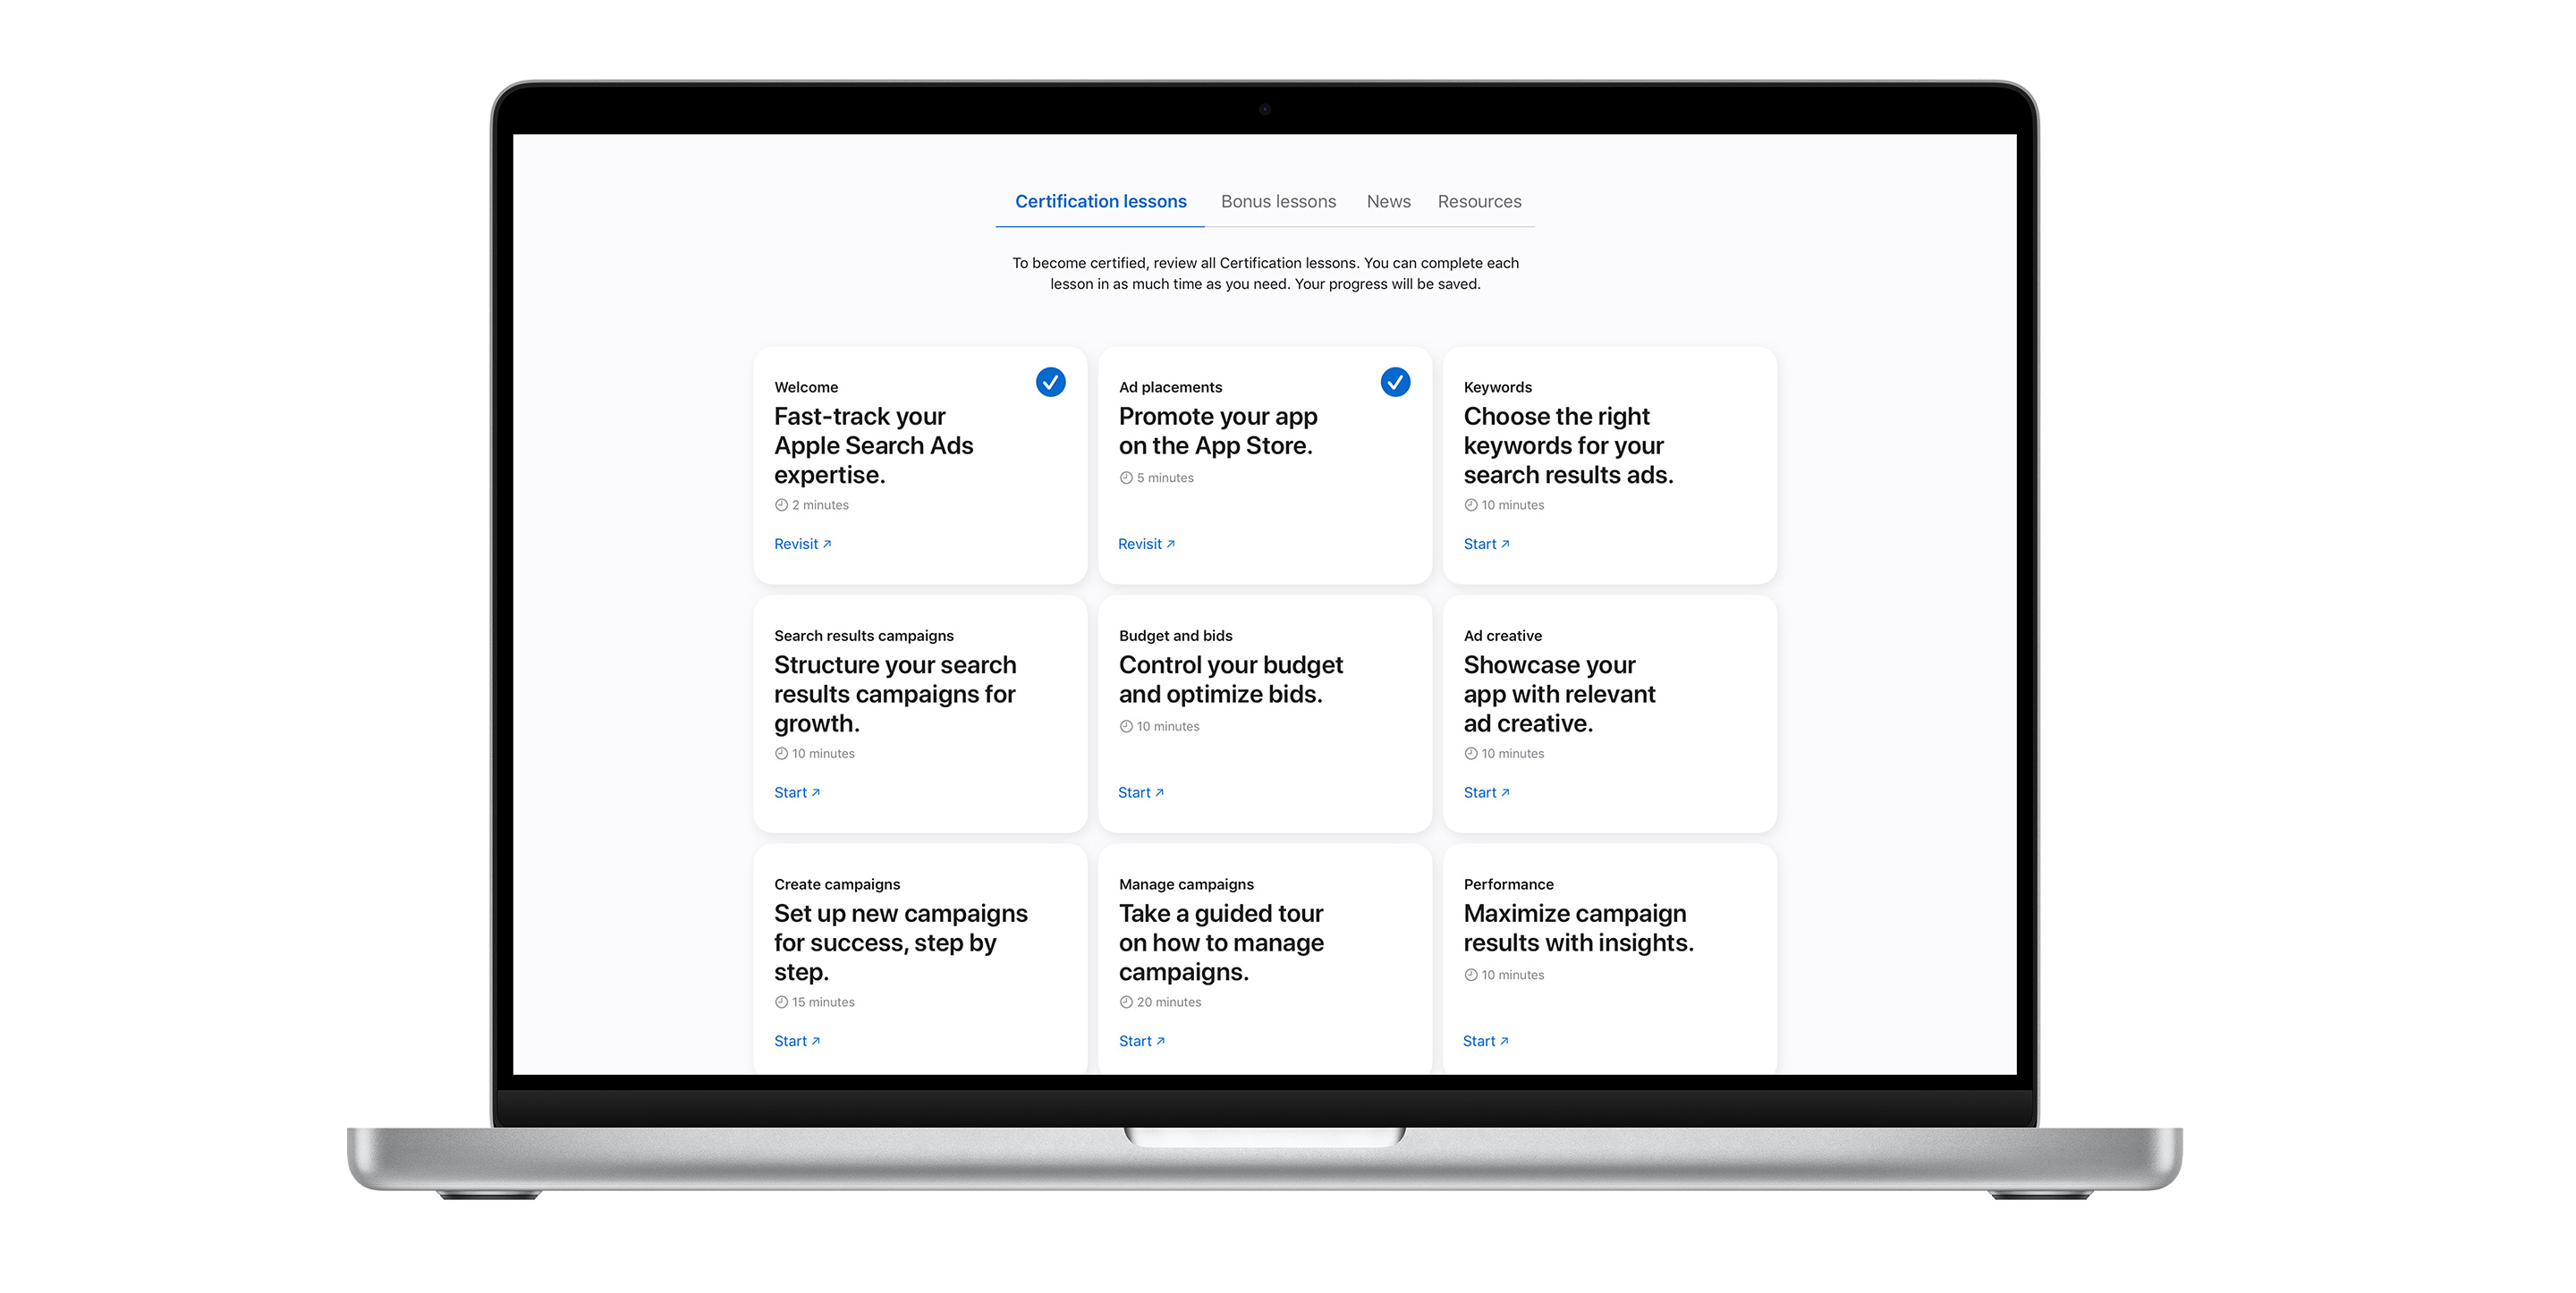 Apple Search Ads 认证课程页面显示 9 个课程模块。 前两节课上有蓝色勾号，表明已完成。